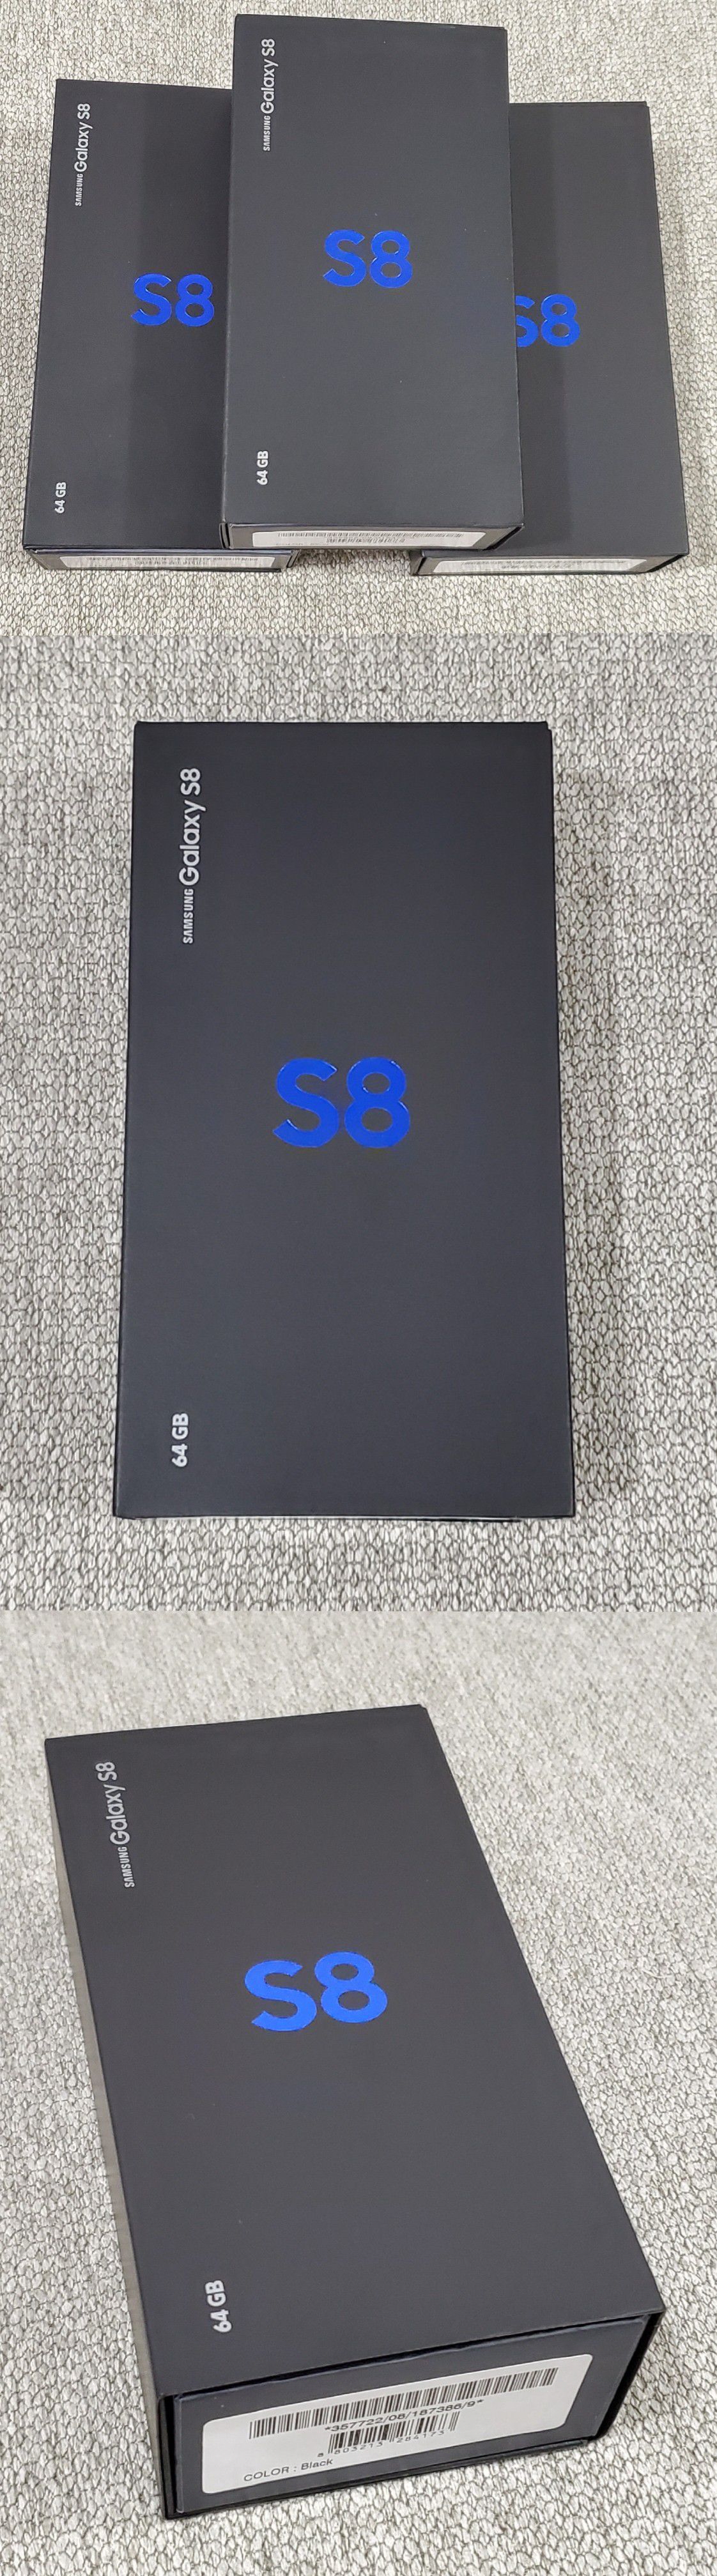 SAMSUNG GALAXY S8 64GB - FACTORY UNLOCKED - BRAND NEW SEALED IN BOX